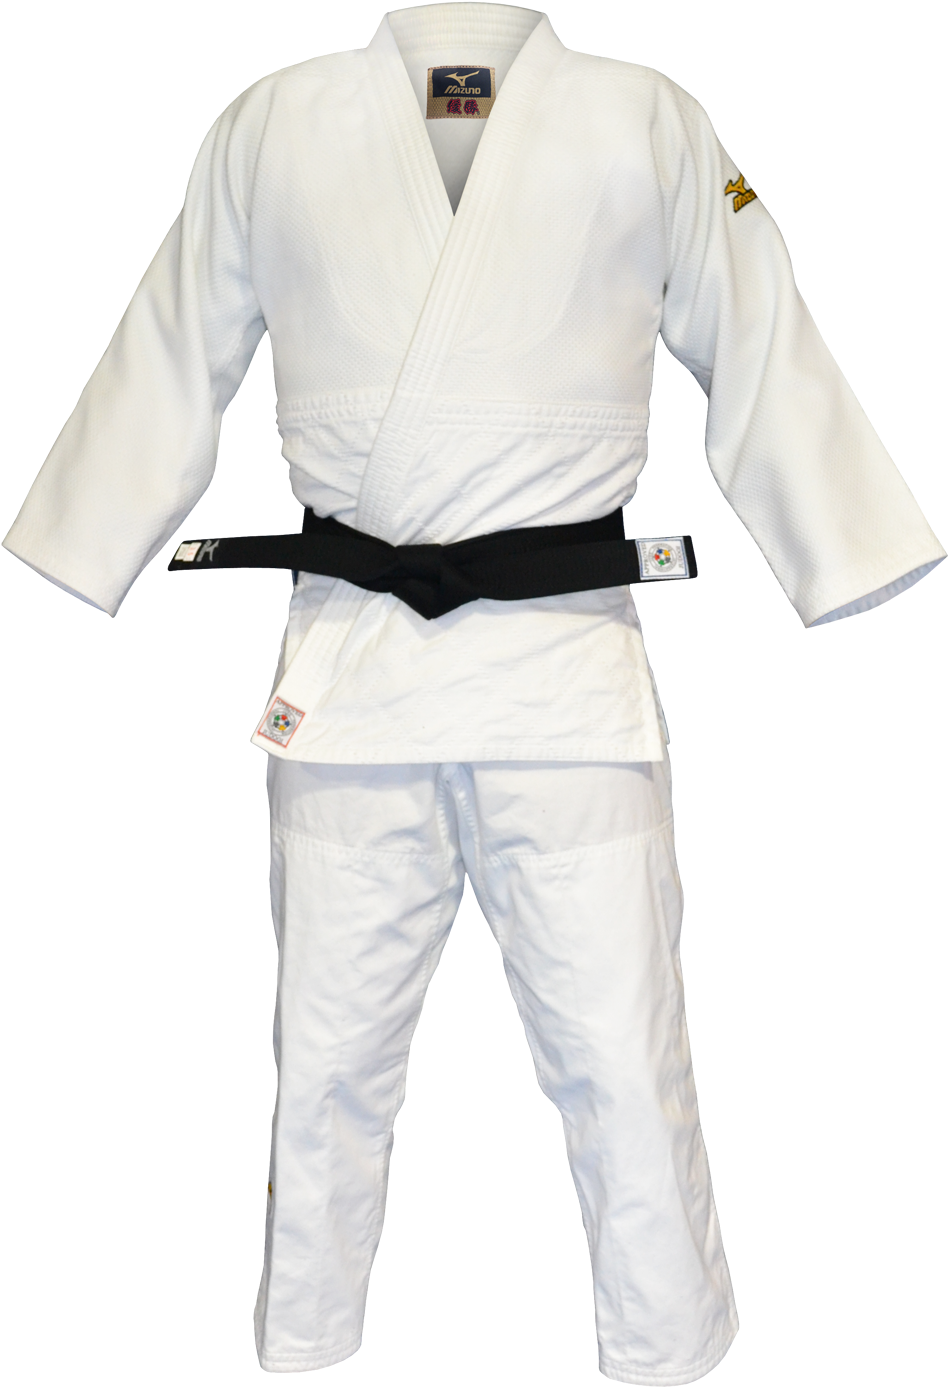 Judogi Uniform PNG Images